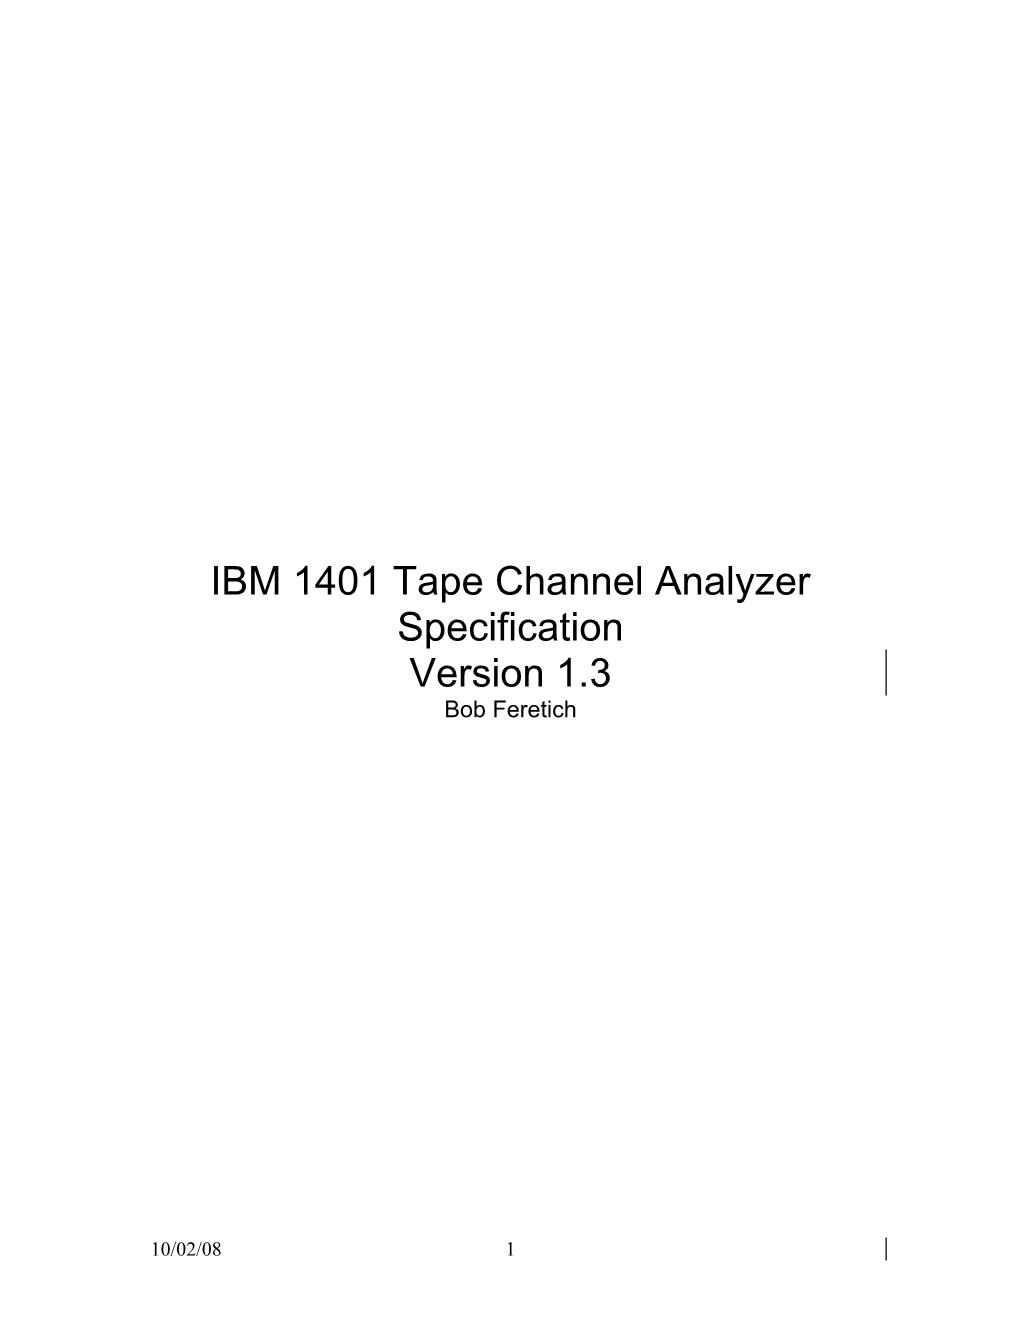 IBM 1401 Tape Channel Analyzer Specification Version 1.3 Bob Feretich